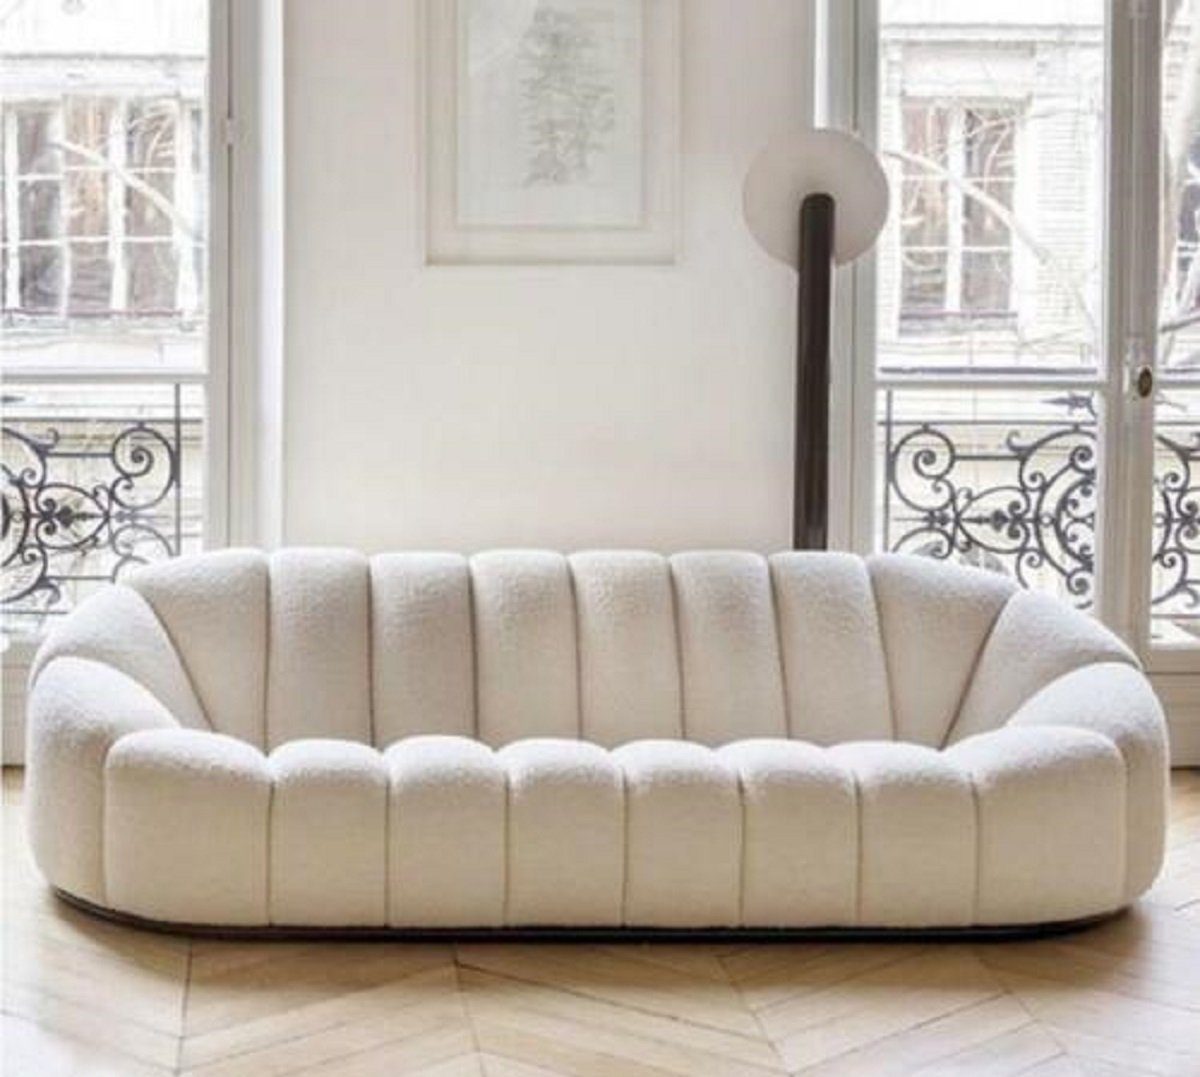 JVmoebel Sofa, Textil Sofa 3 Sitzer Dreisitzer Relax Möbel Sitz Design Lounge Neu